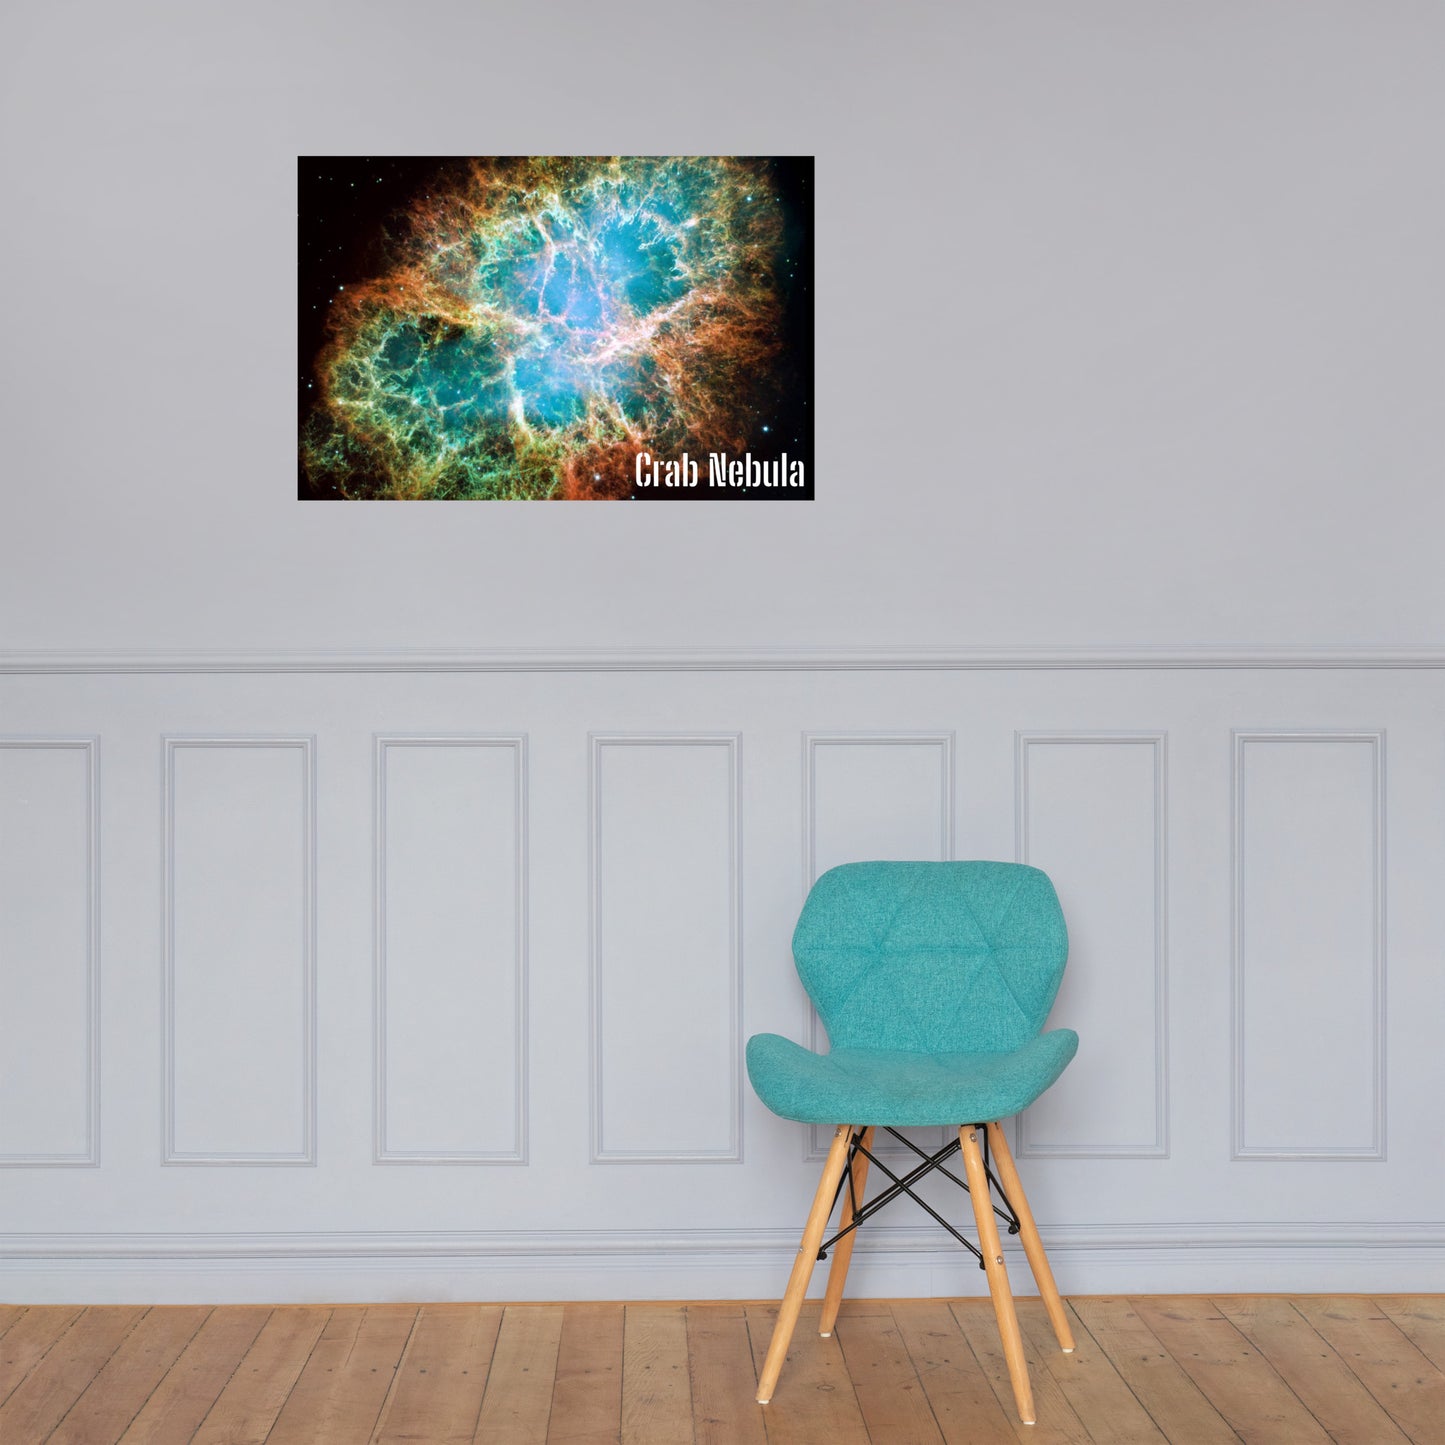 Poster: Crab Nebula